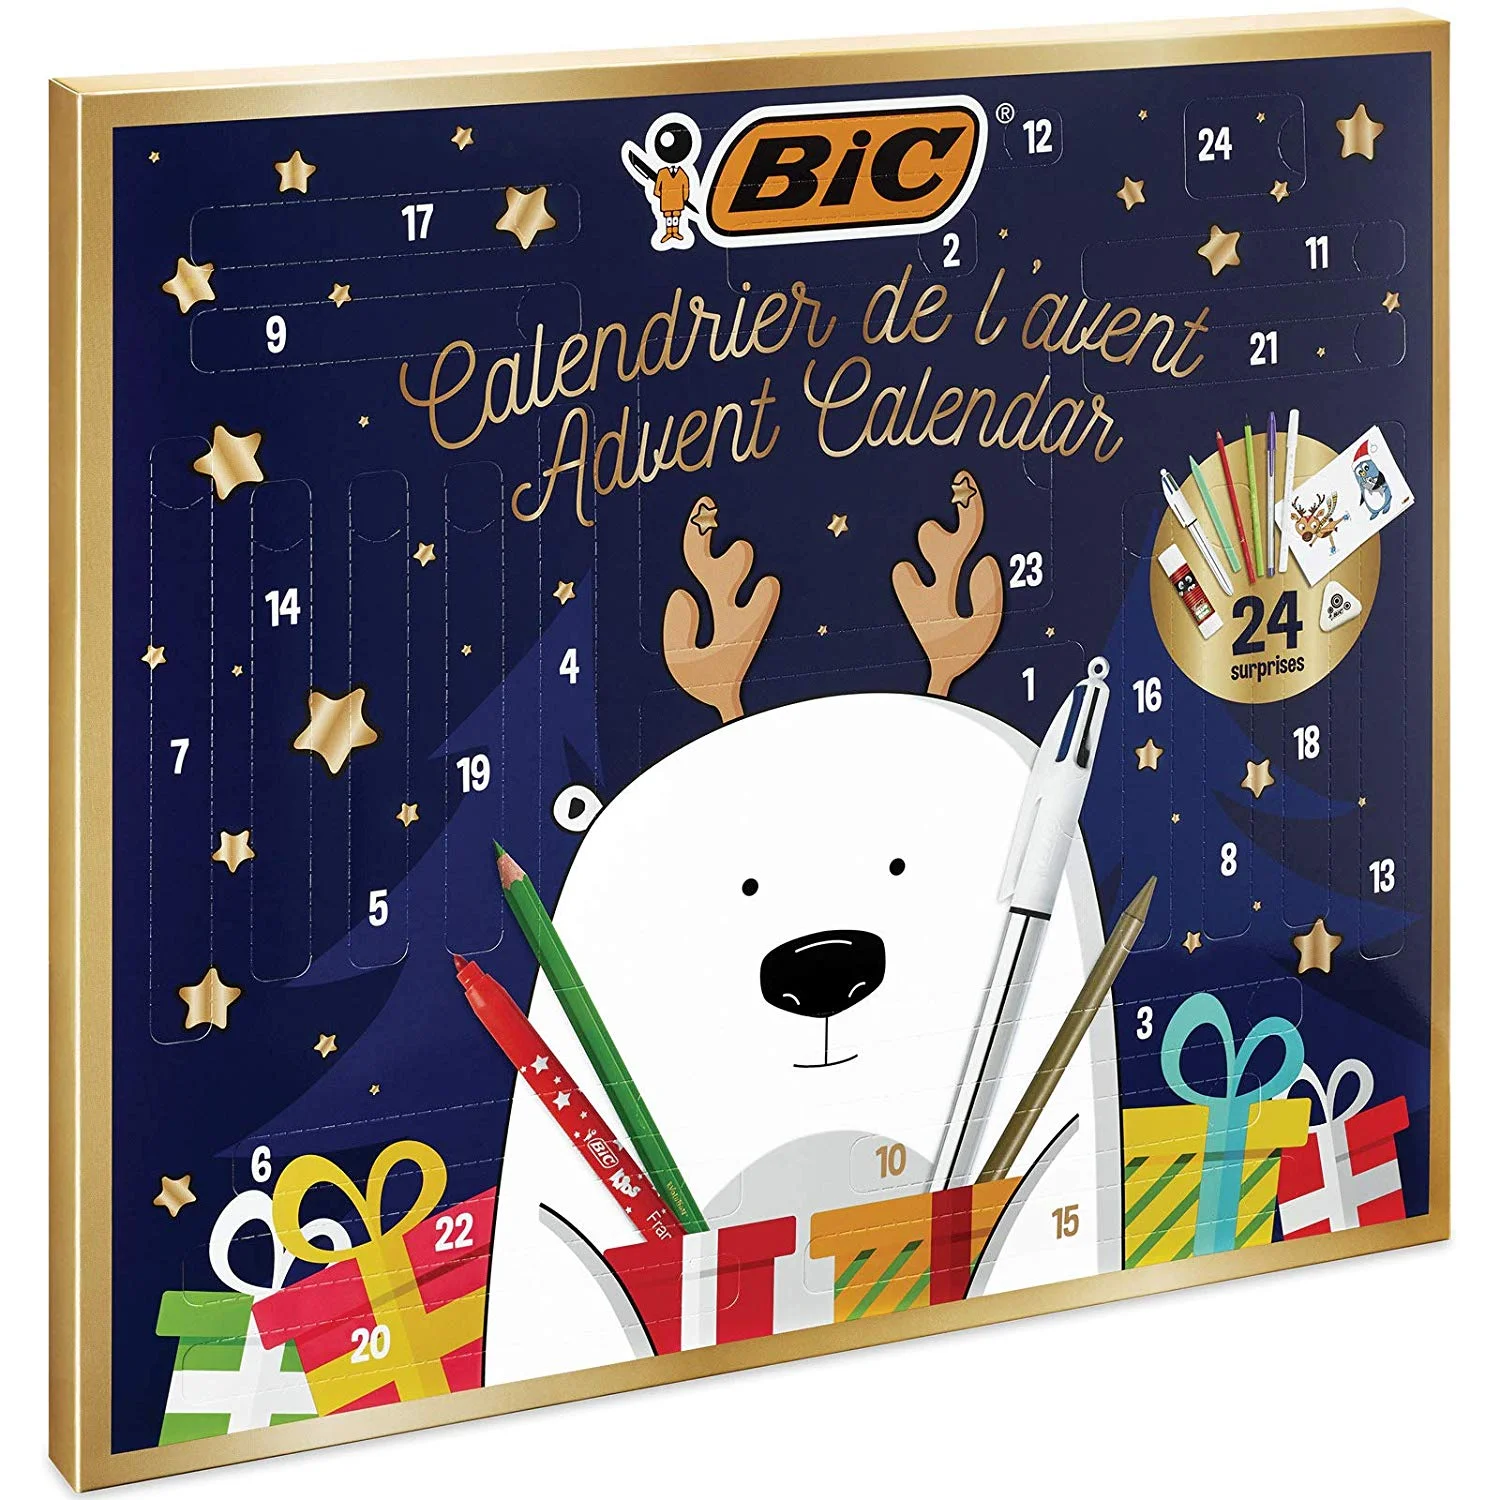 BIC + BIC Advent Calendar